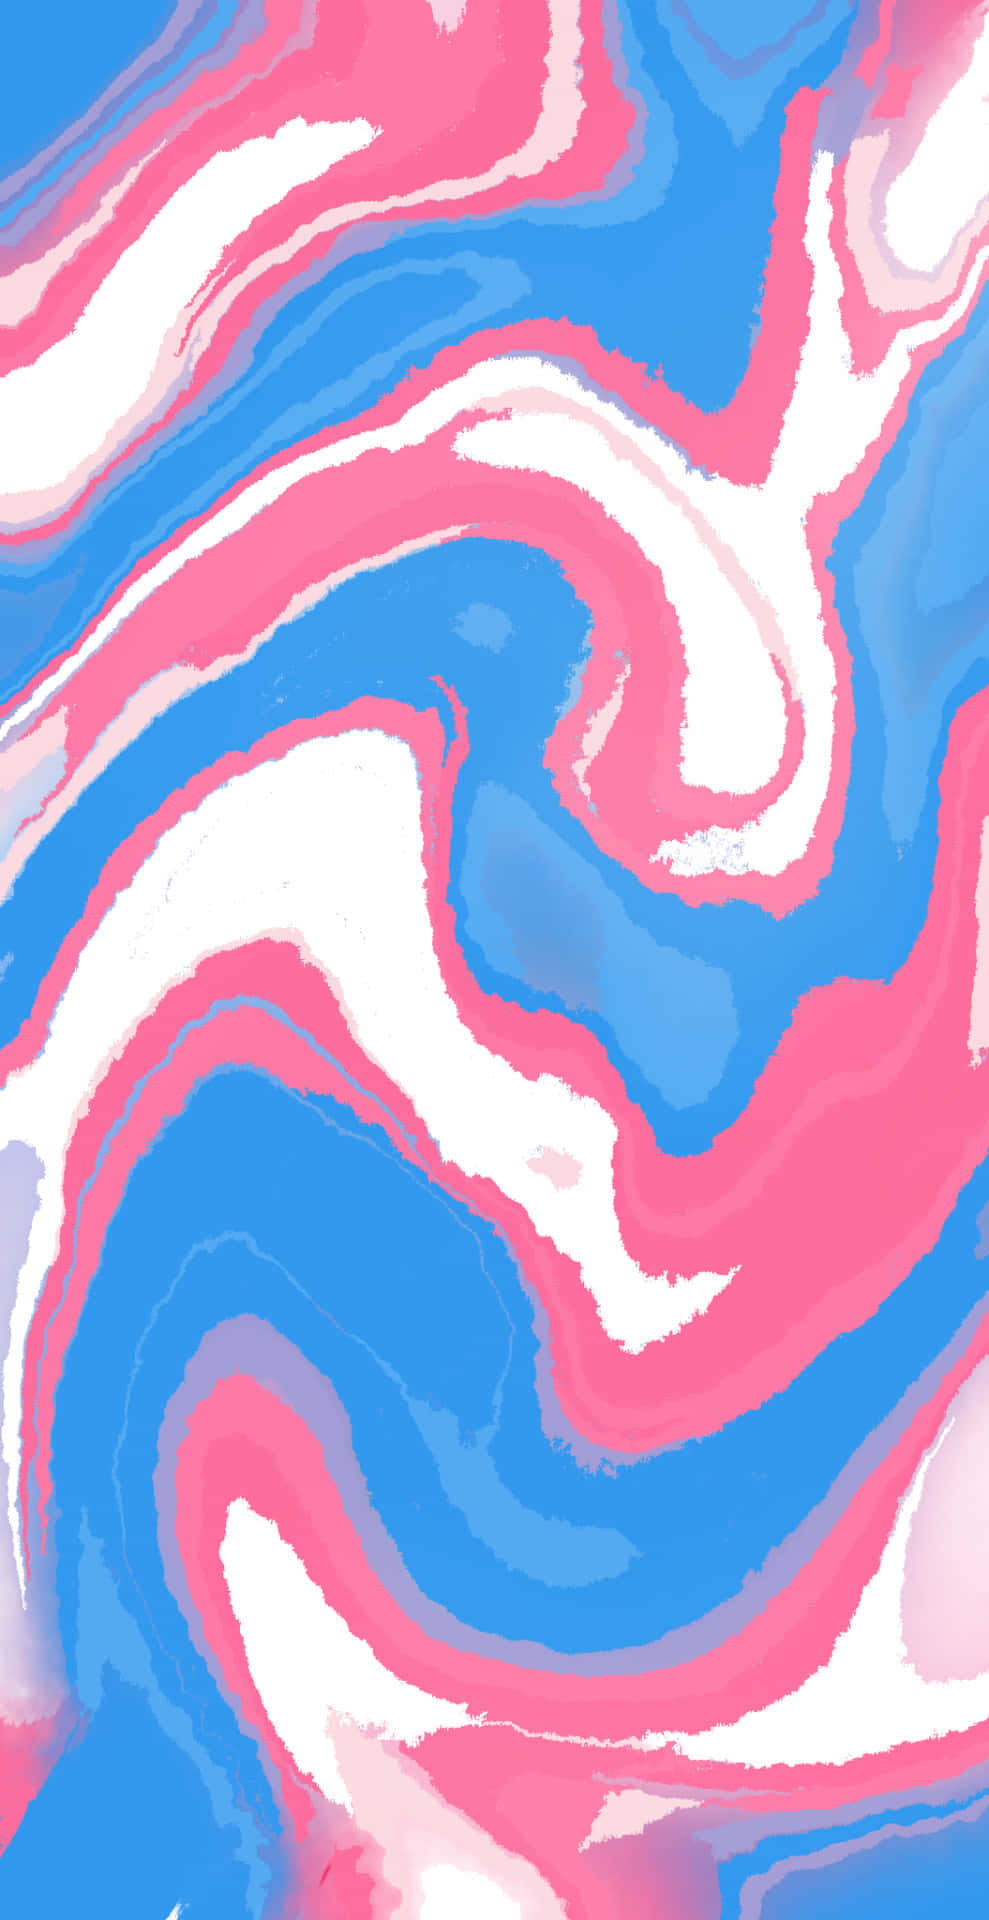 Unmotivo A Spirale Rosa E Blu Su Uno Sfondo Blu Sfondo